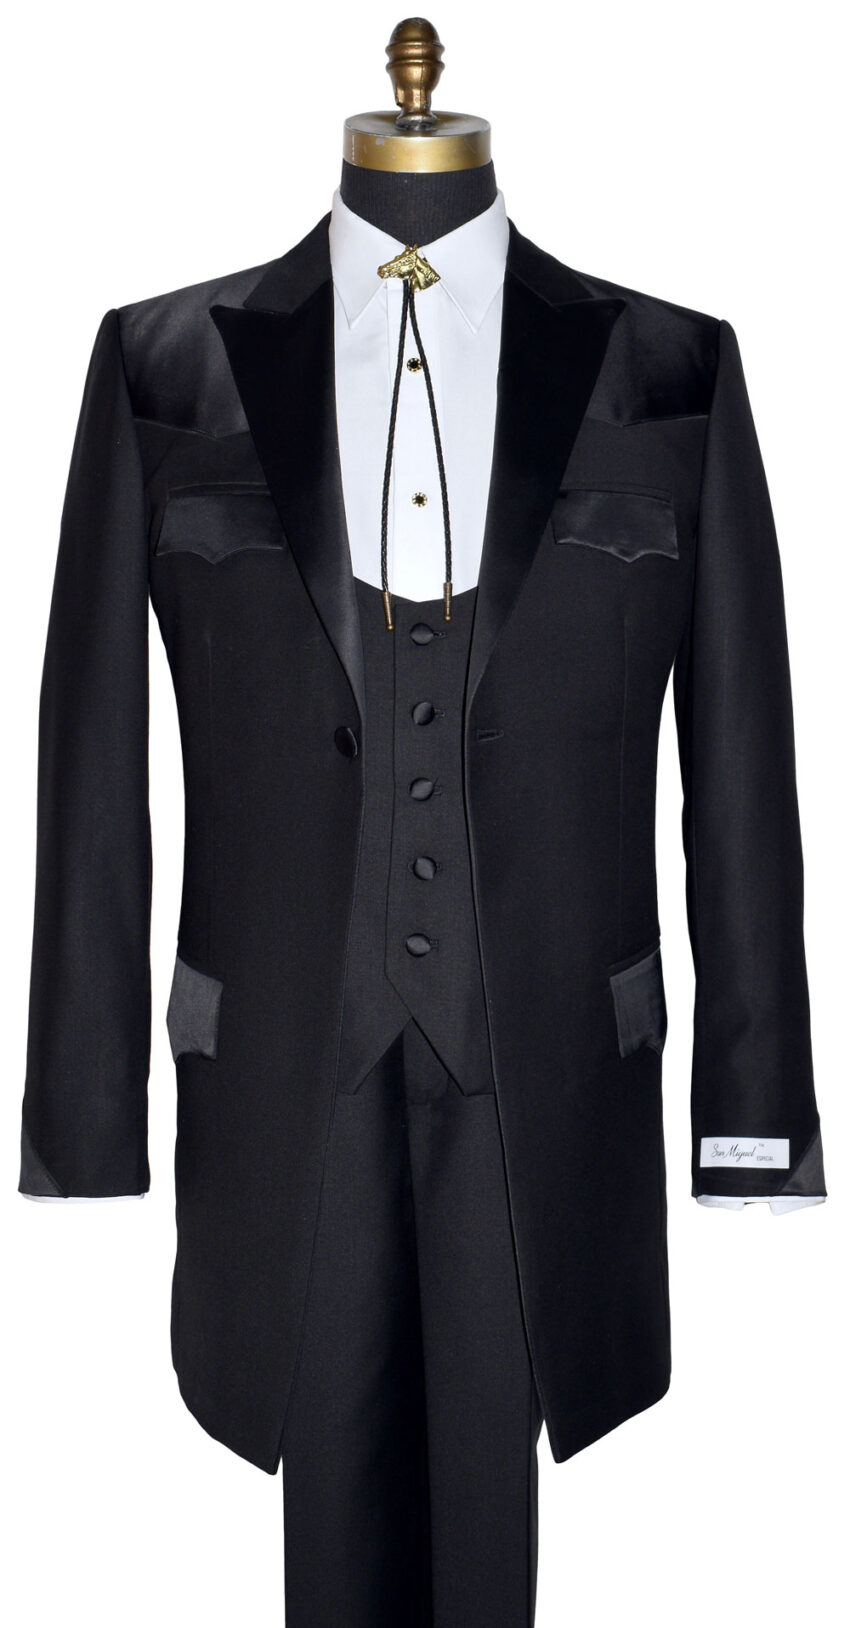 Western Tuxedo With Long Coat